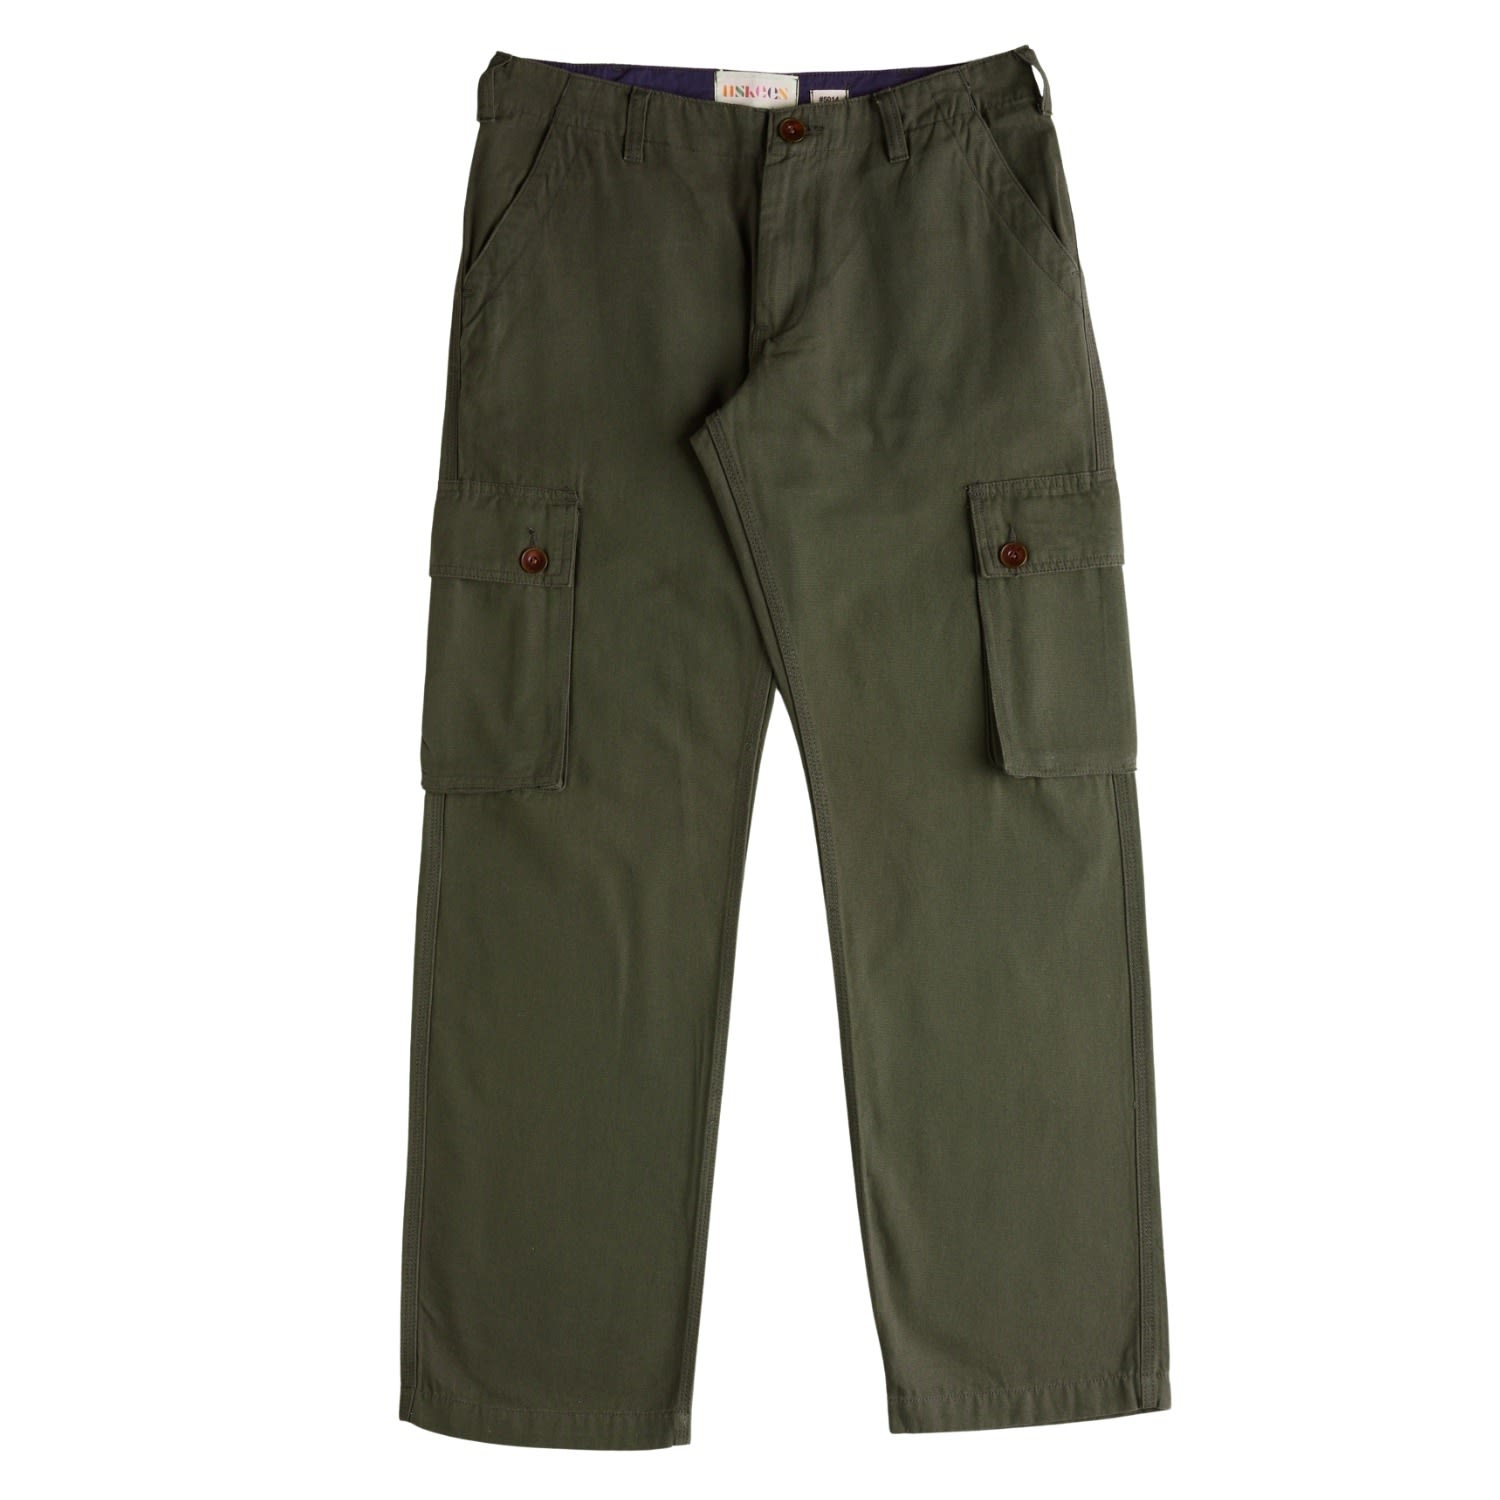 Uskees Men's 5014 Cargo Pants - Vine Green